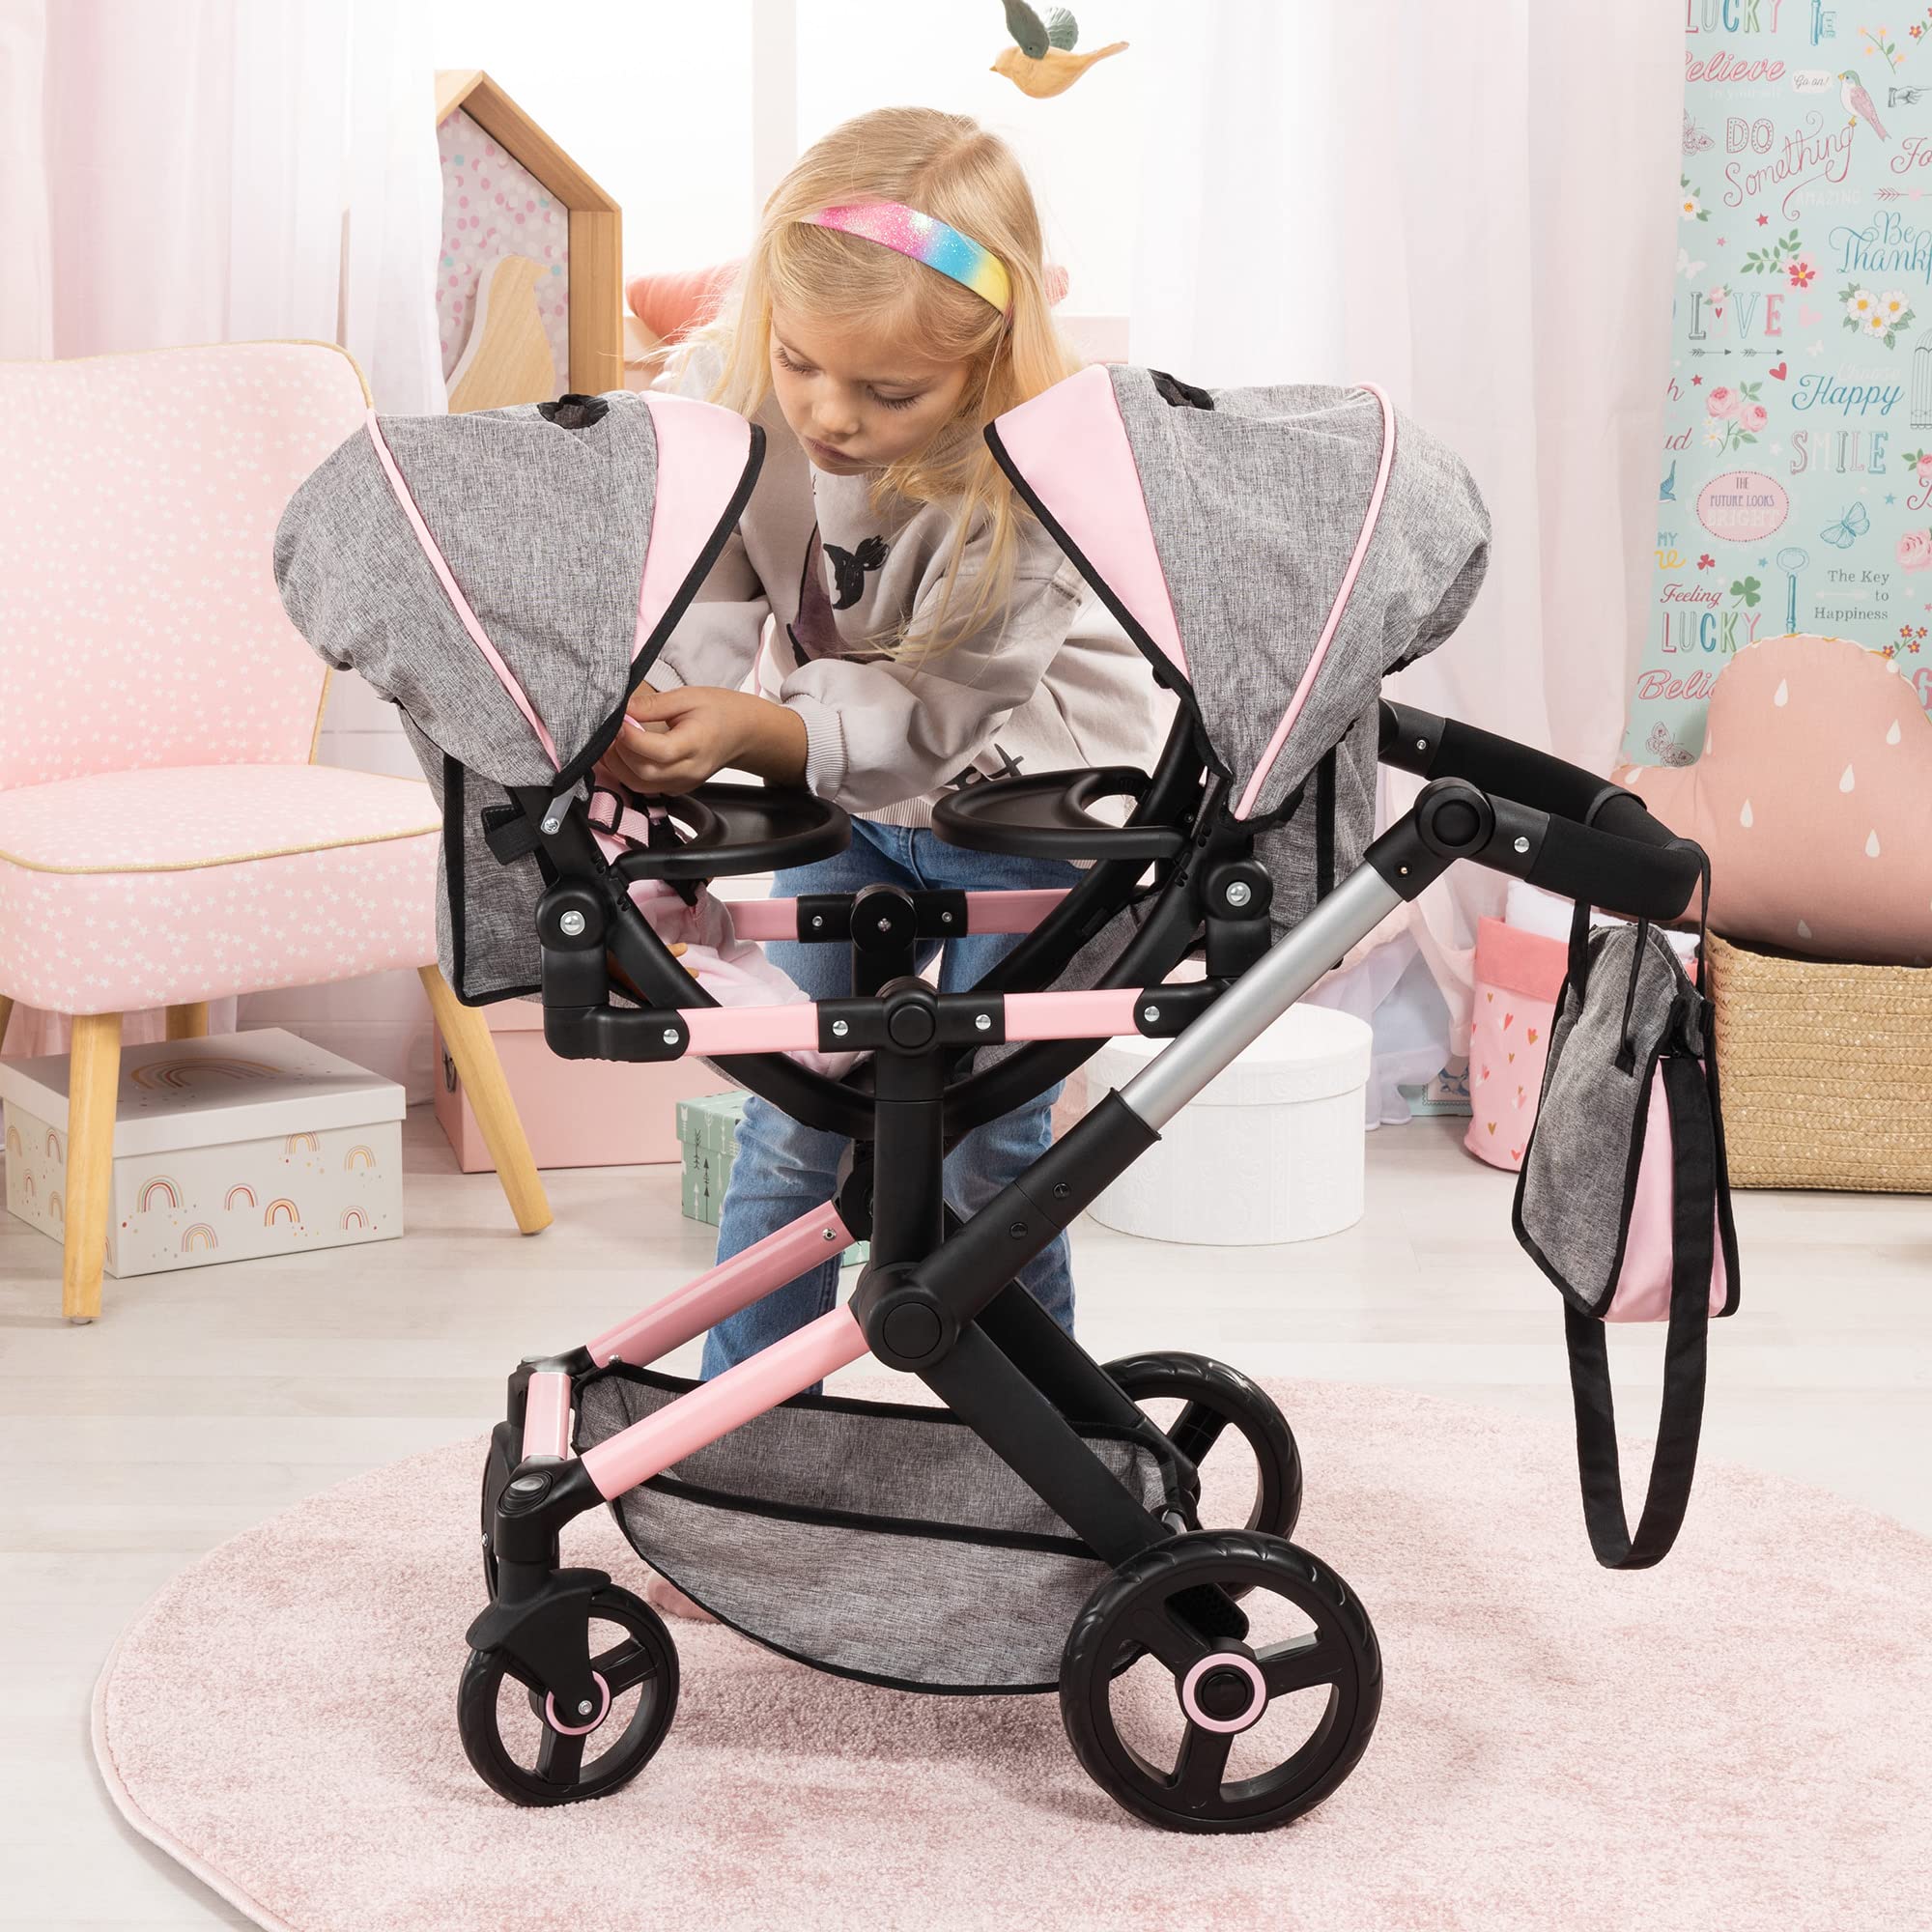 Bayer Design Dolls: Xeo Twin Pram - Butterfly Grey & Pink - Matching Handbag, Adjustable Handle, for Dolls Up to 20